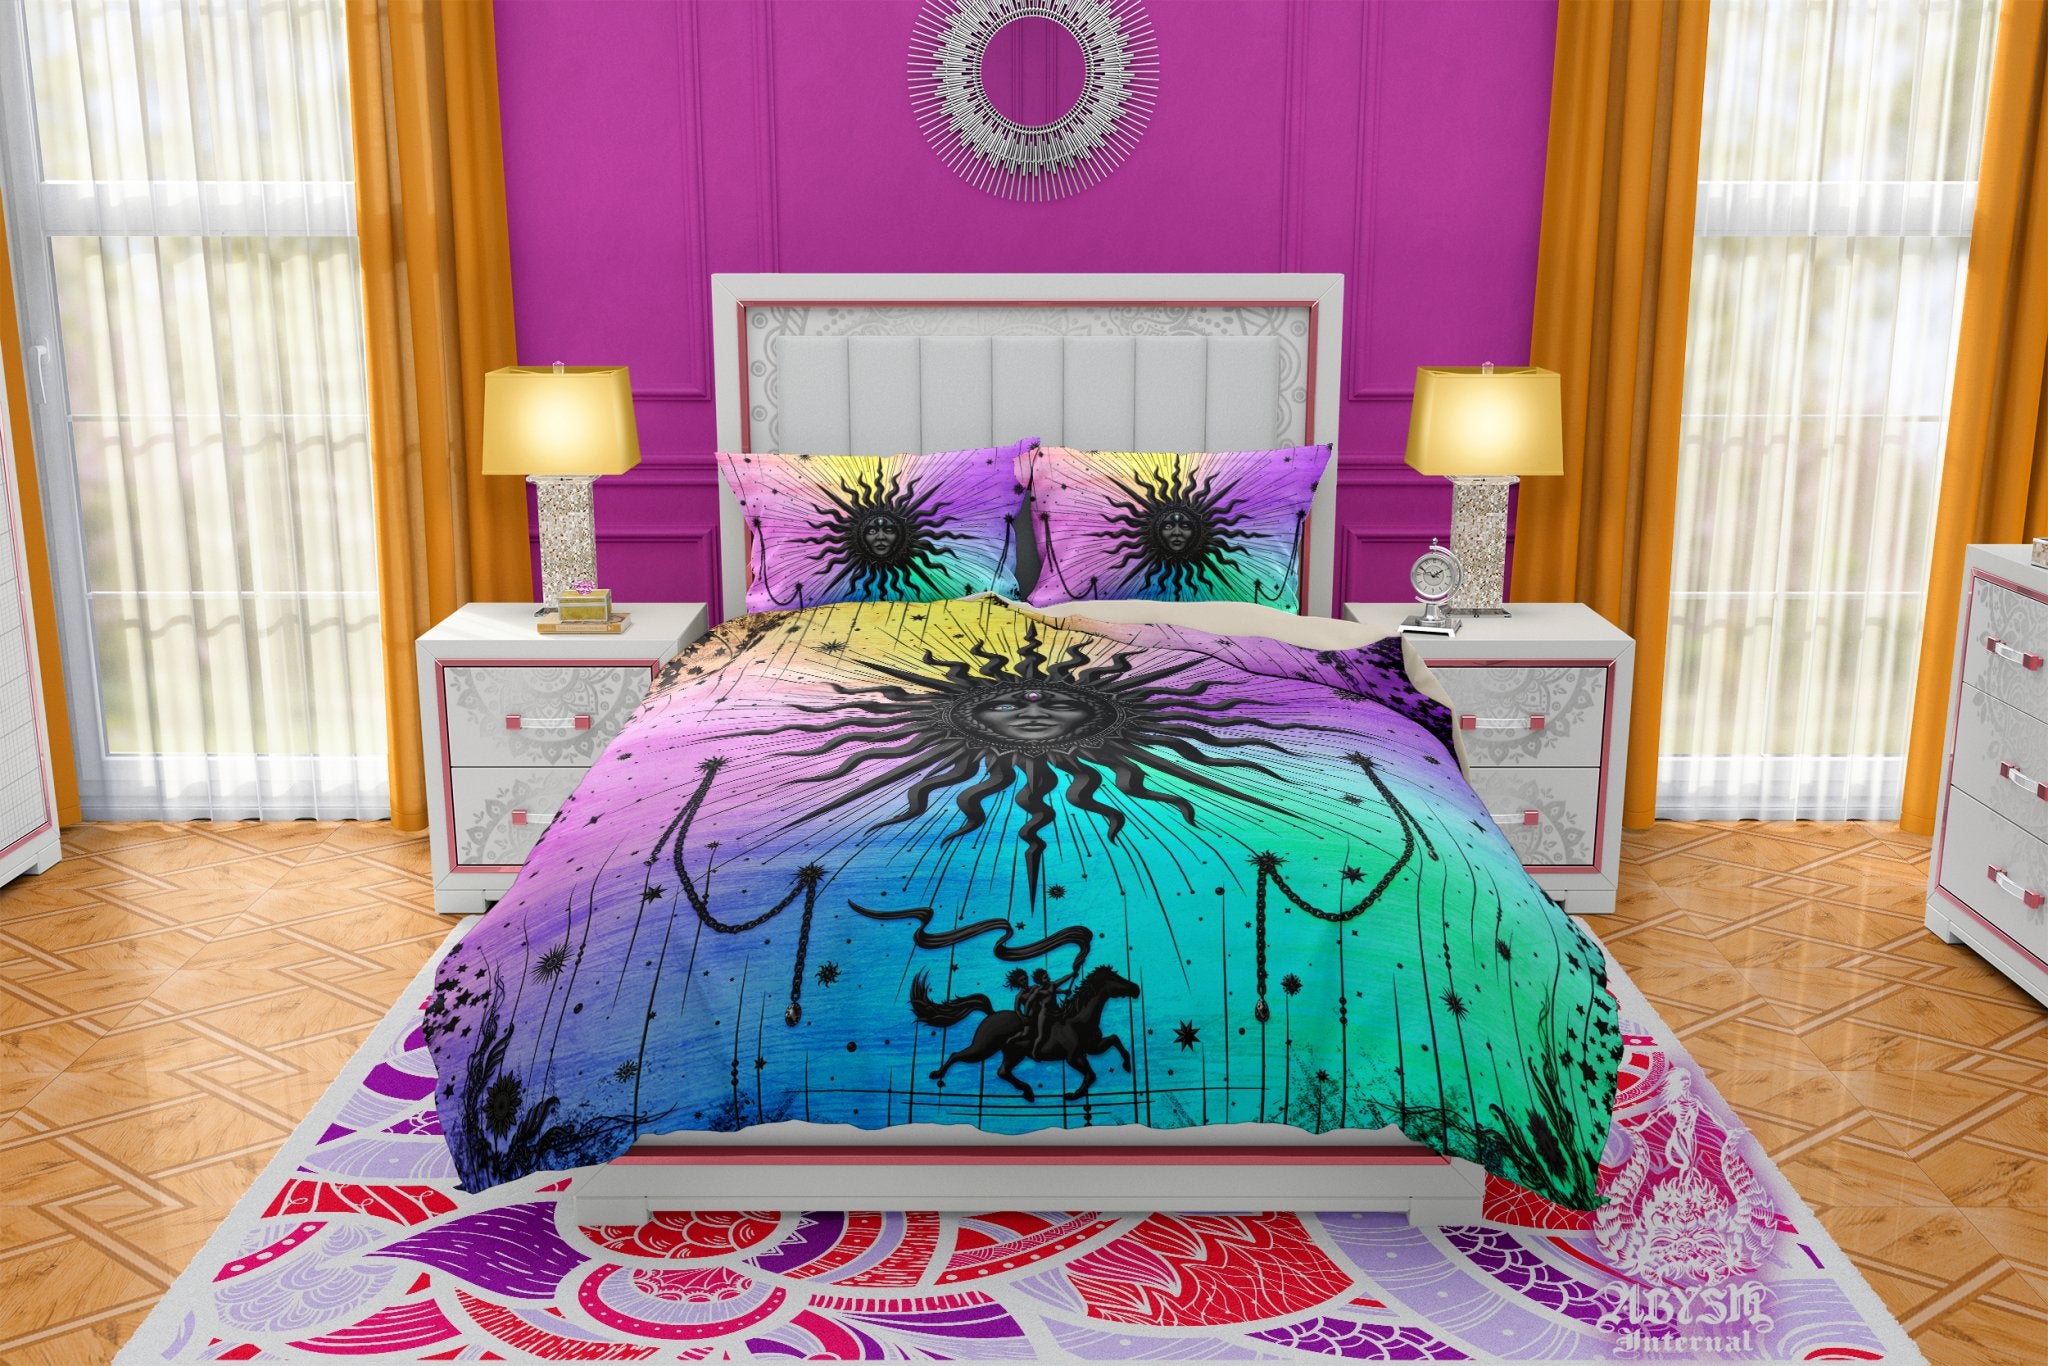 Sun Duvet Cover, Bed Covering, Indie Comforter, Psychedelic Bedroom Decor King, Queen & Twin Bedding Set - Tarot Arcana Art, Pastel Black - Abysm Internal